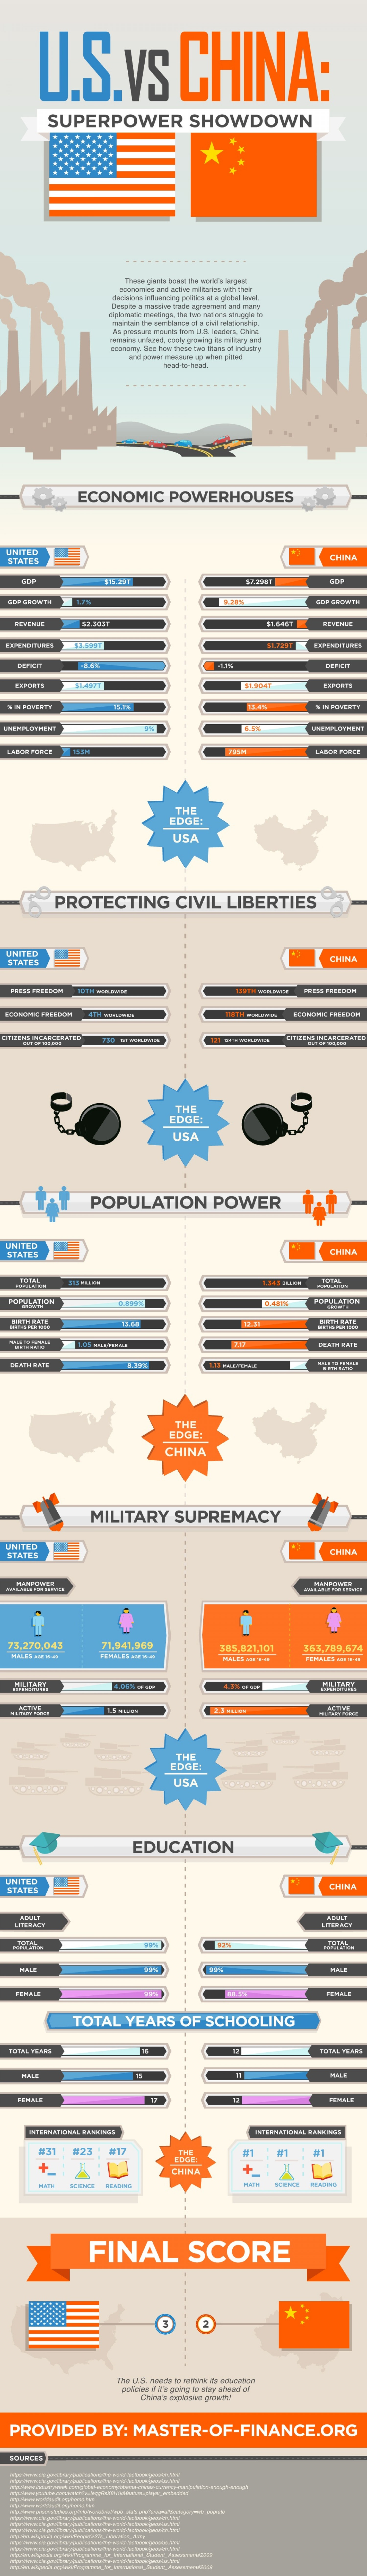 U.S. vs China: Superpower Showdown